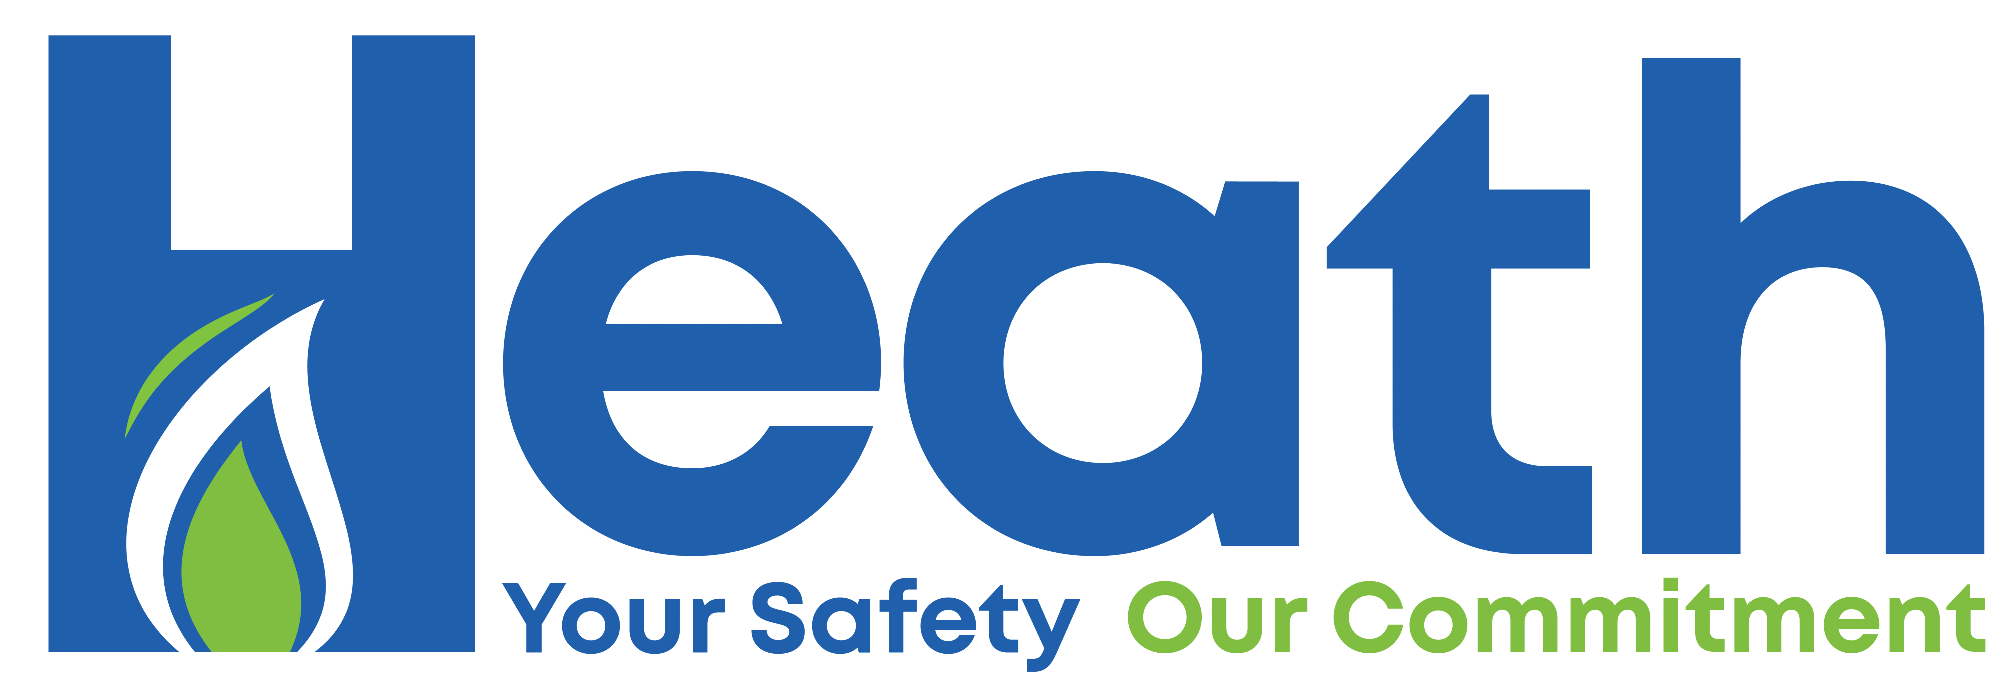 Heath Consultants Incorporated logo.